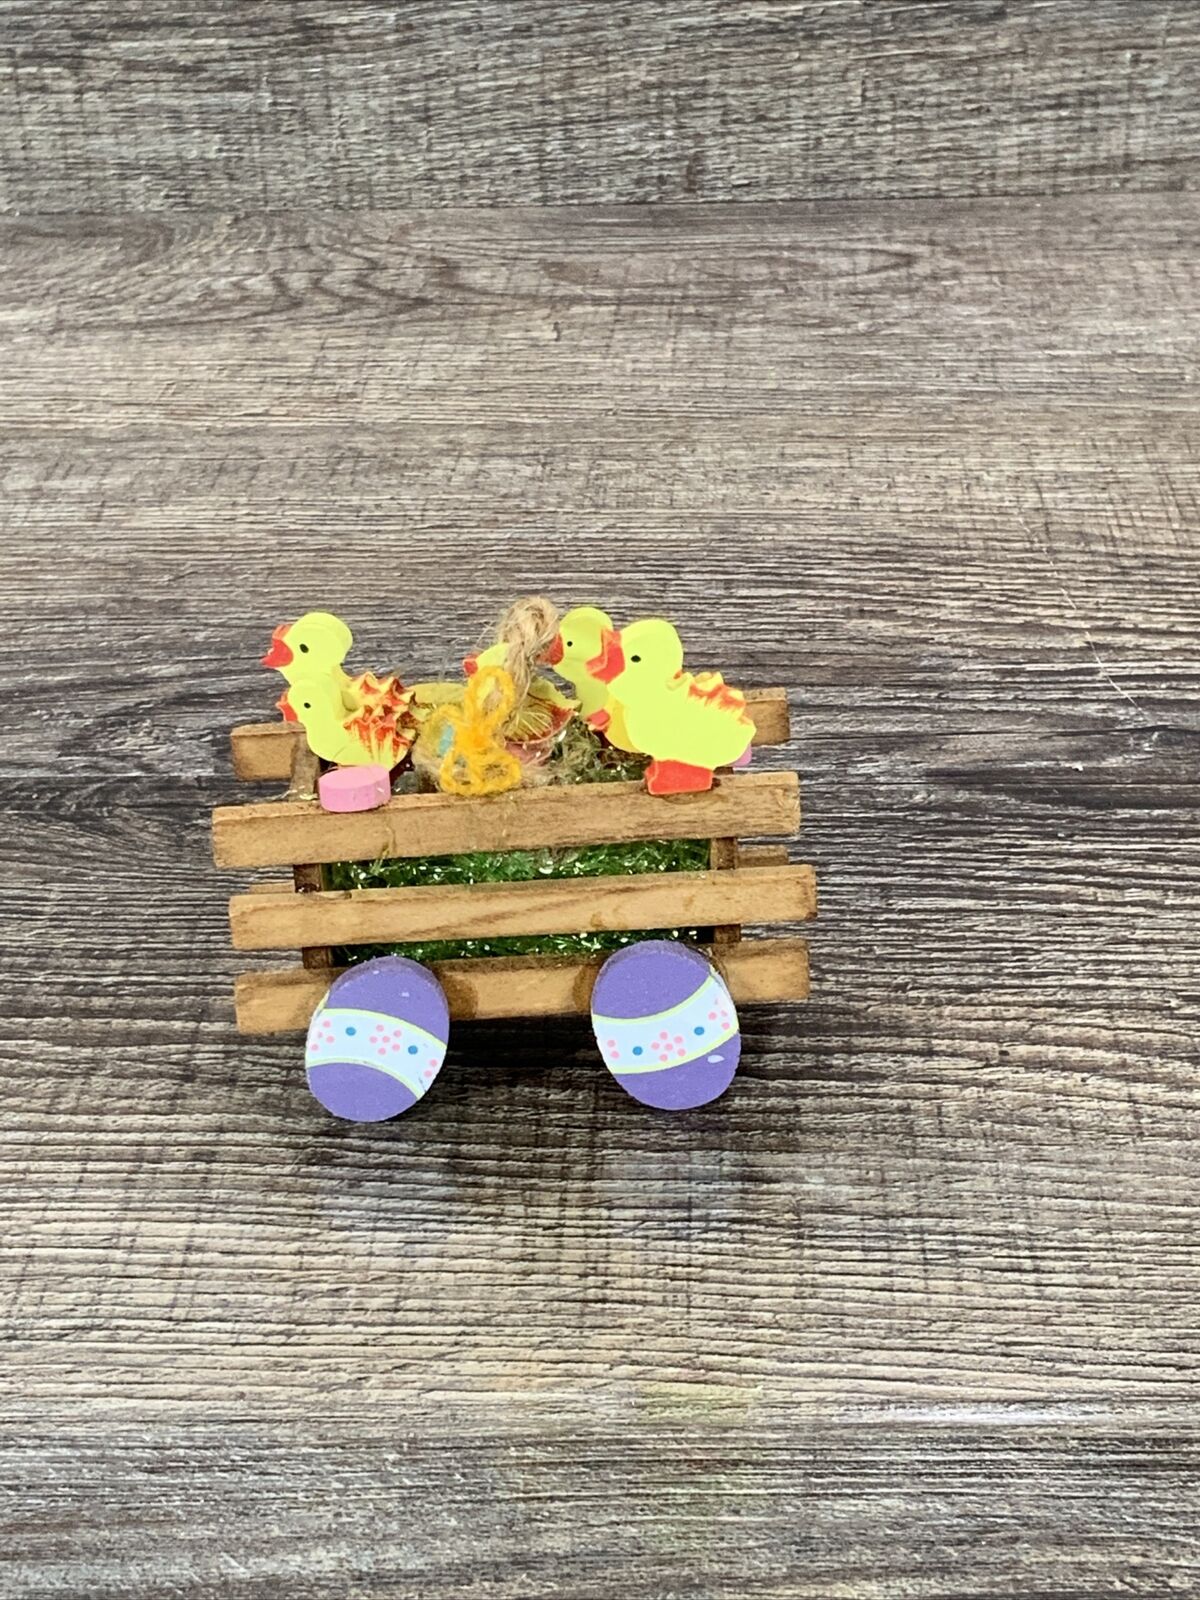 Vtg 1984 Schmid Emgee Easter Decor Chicks Being pulled In Egg Cart/ Adorable